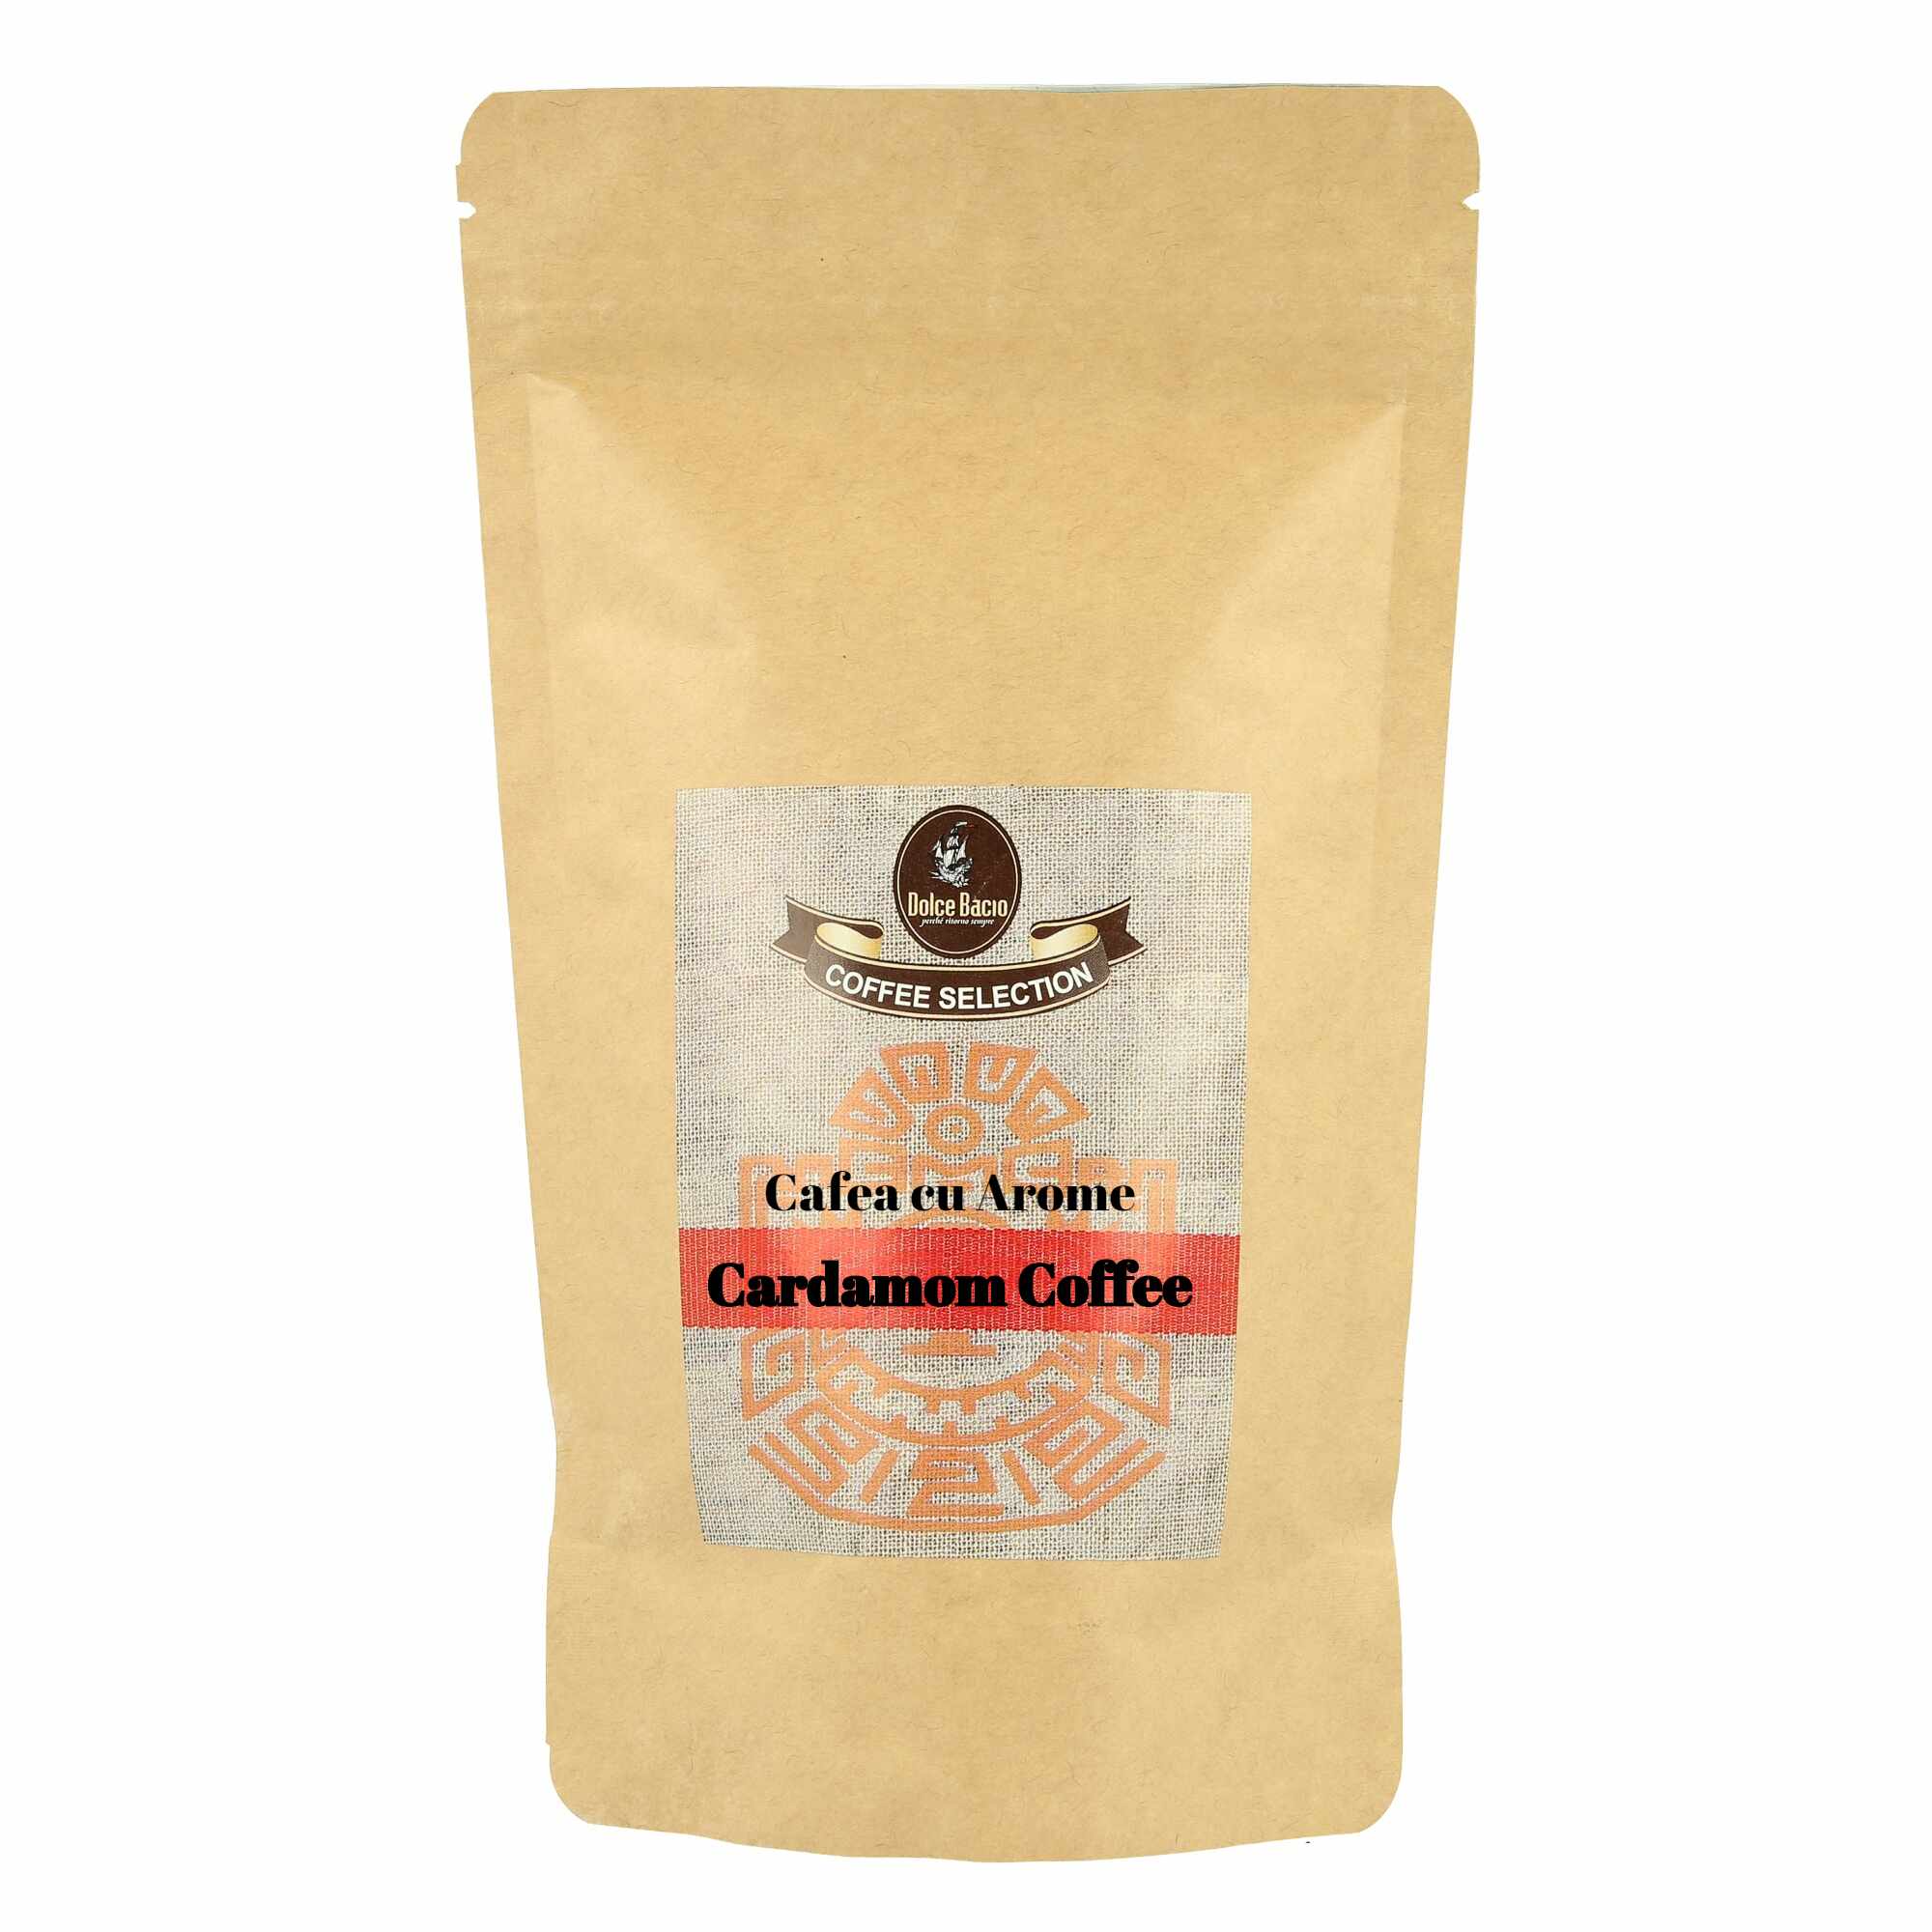 Cardamom Coffee 1 kg french press